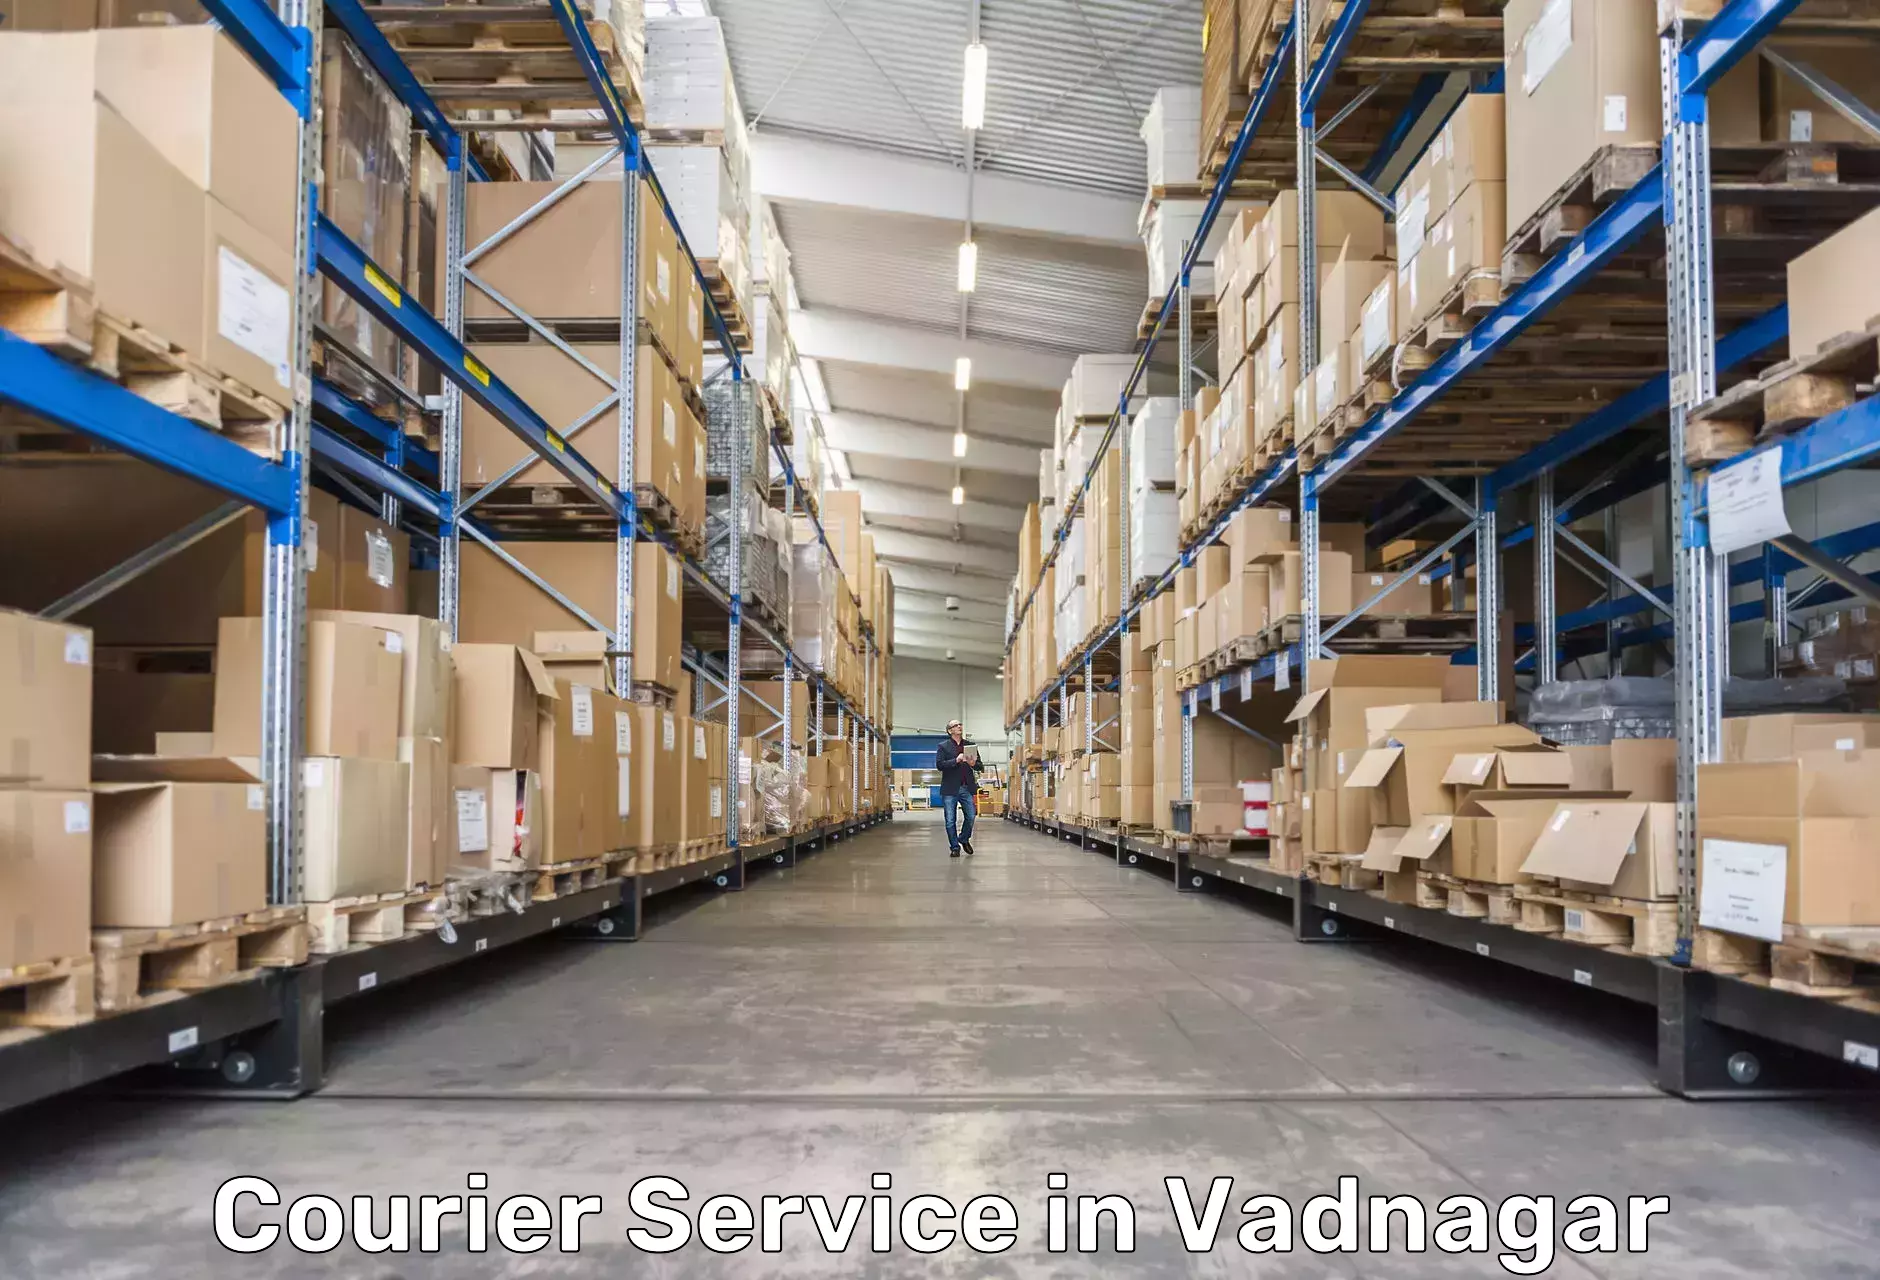 Courier service partnerships in Vadnagar